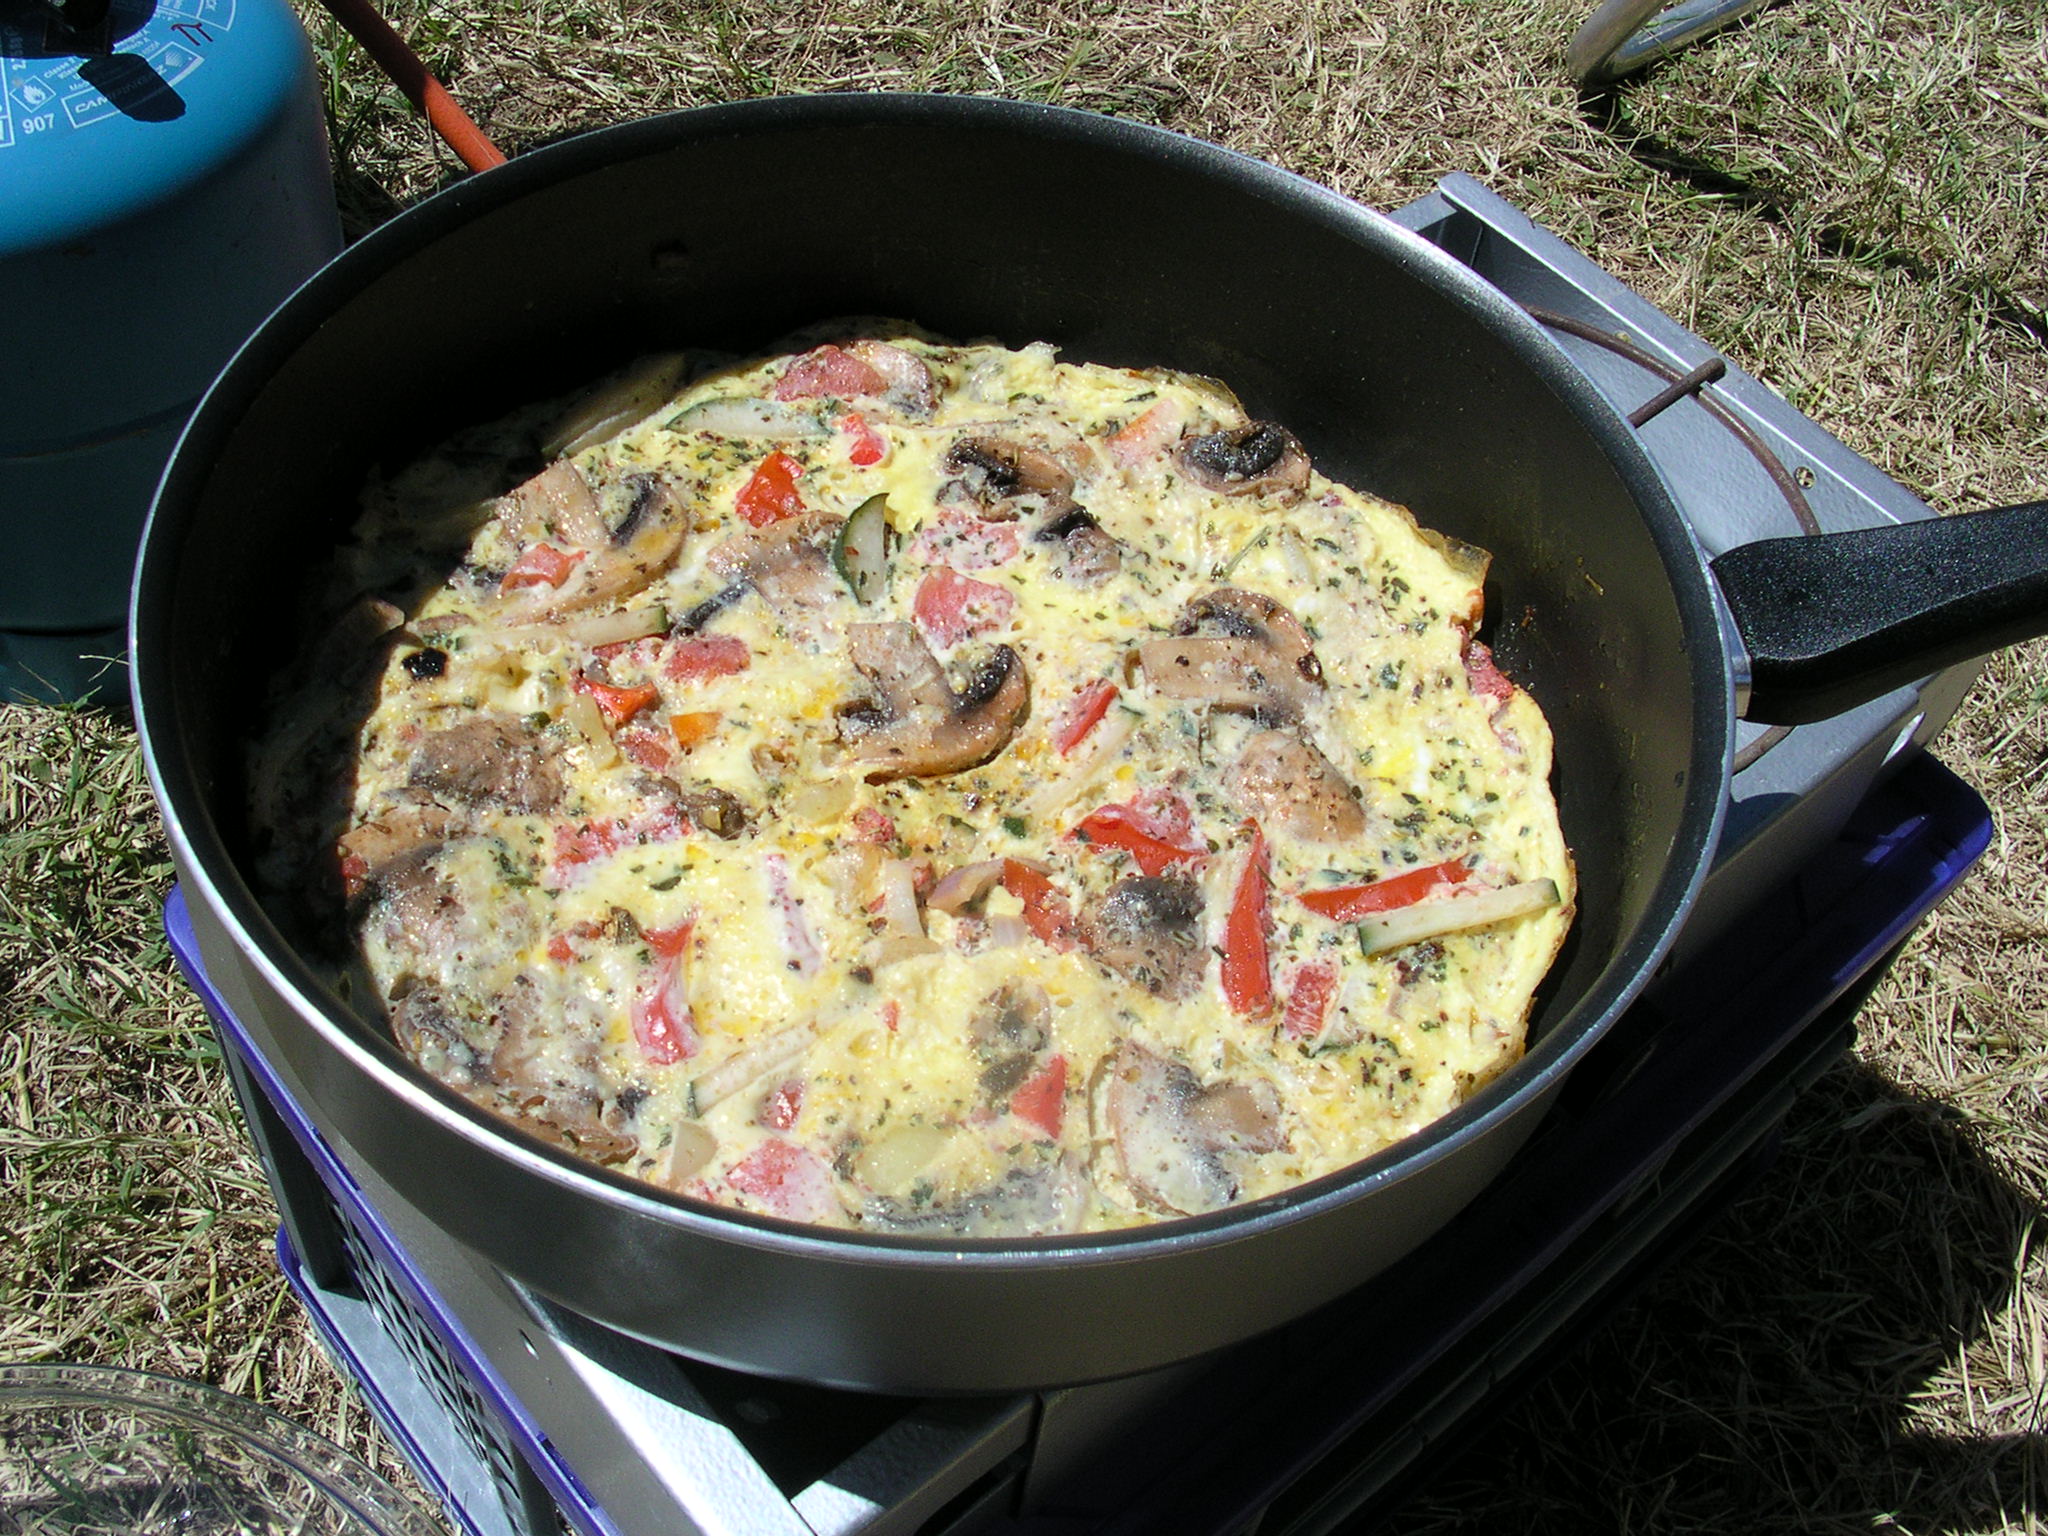 Camping omelet met groentjes